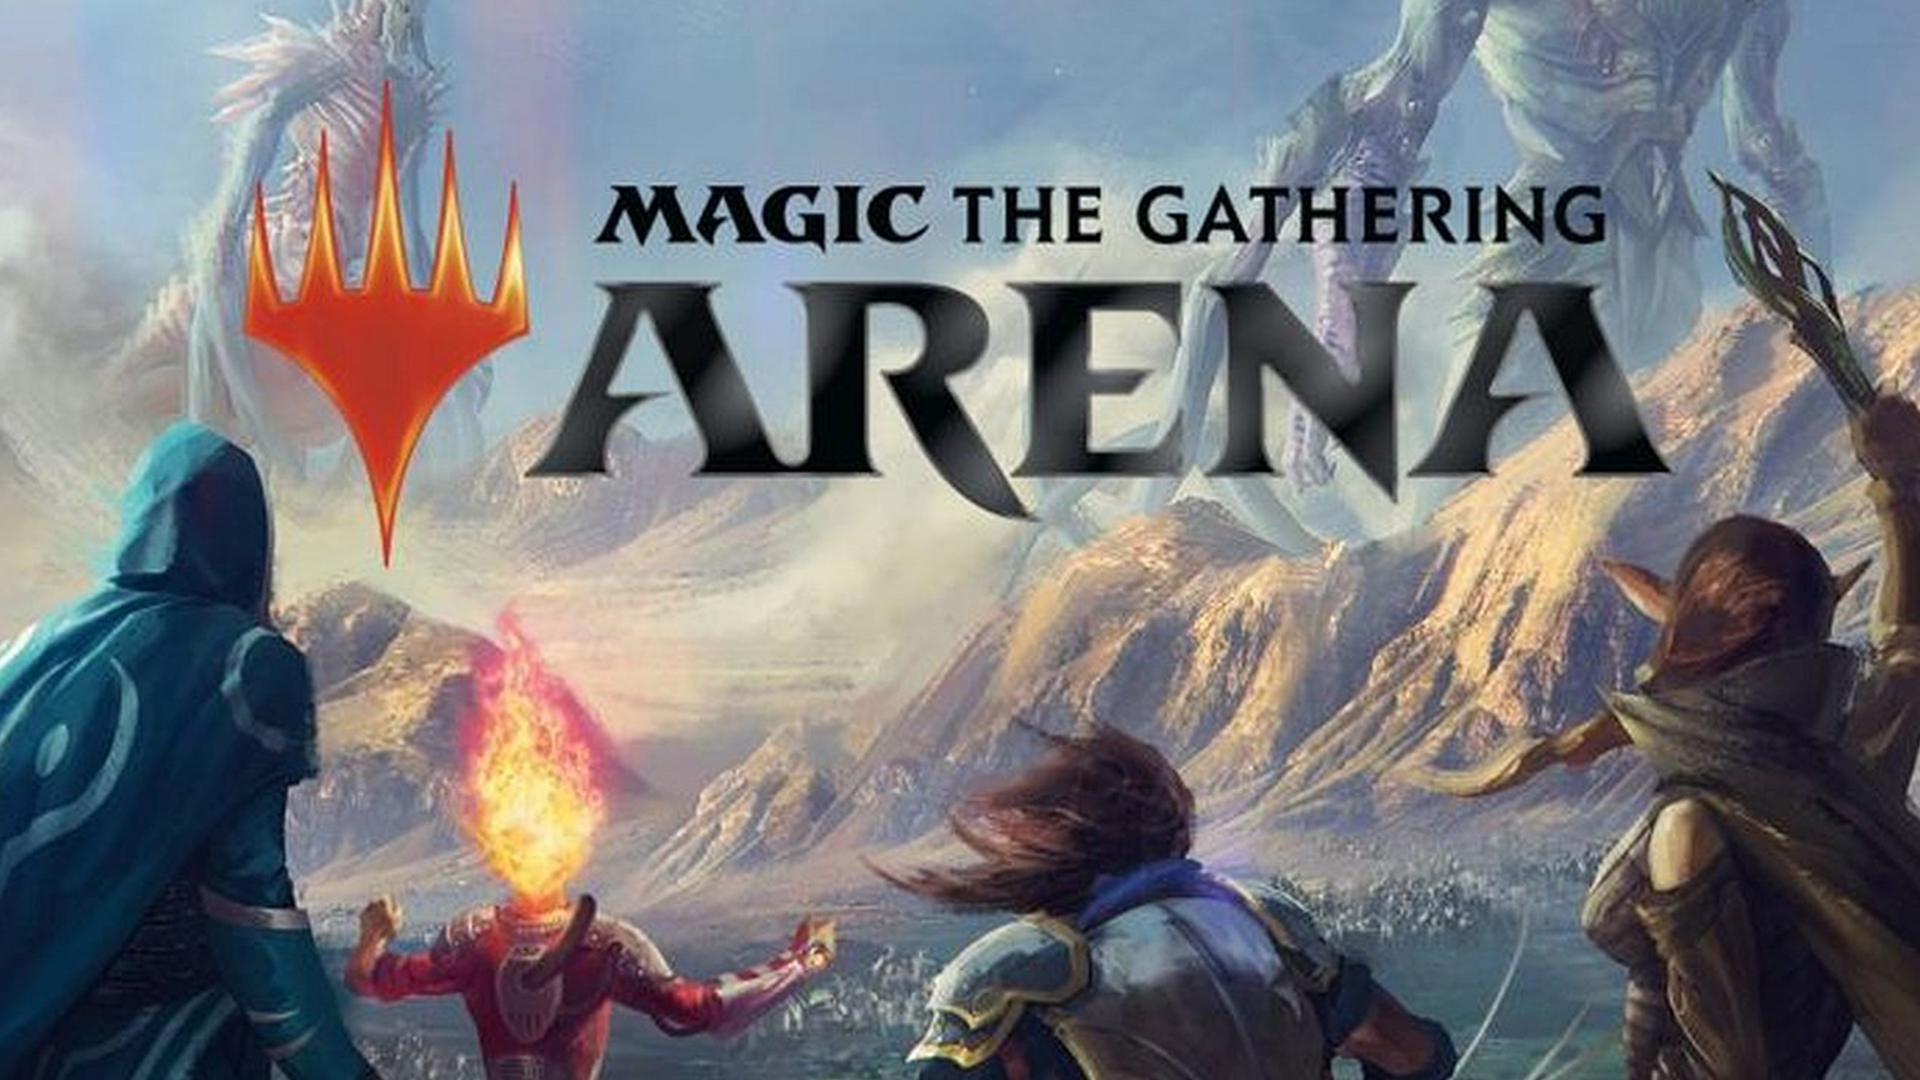 download free magic the gathering arena beginner guide